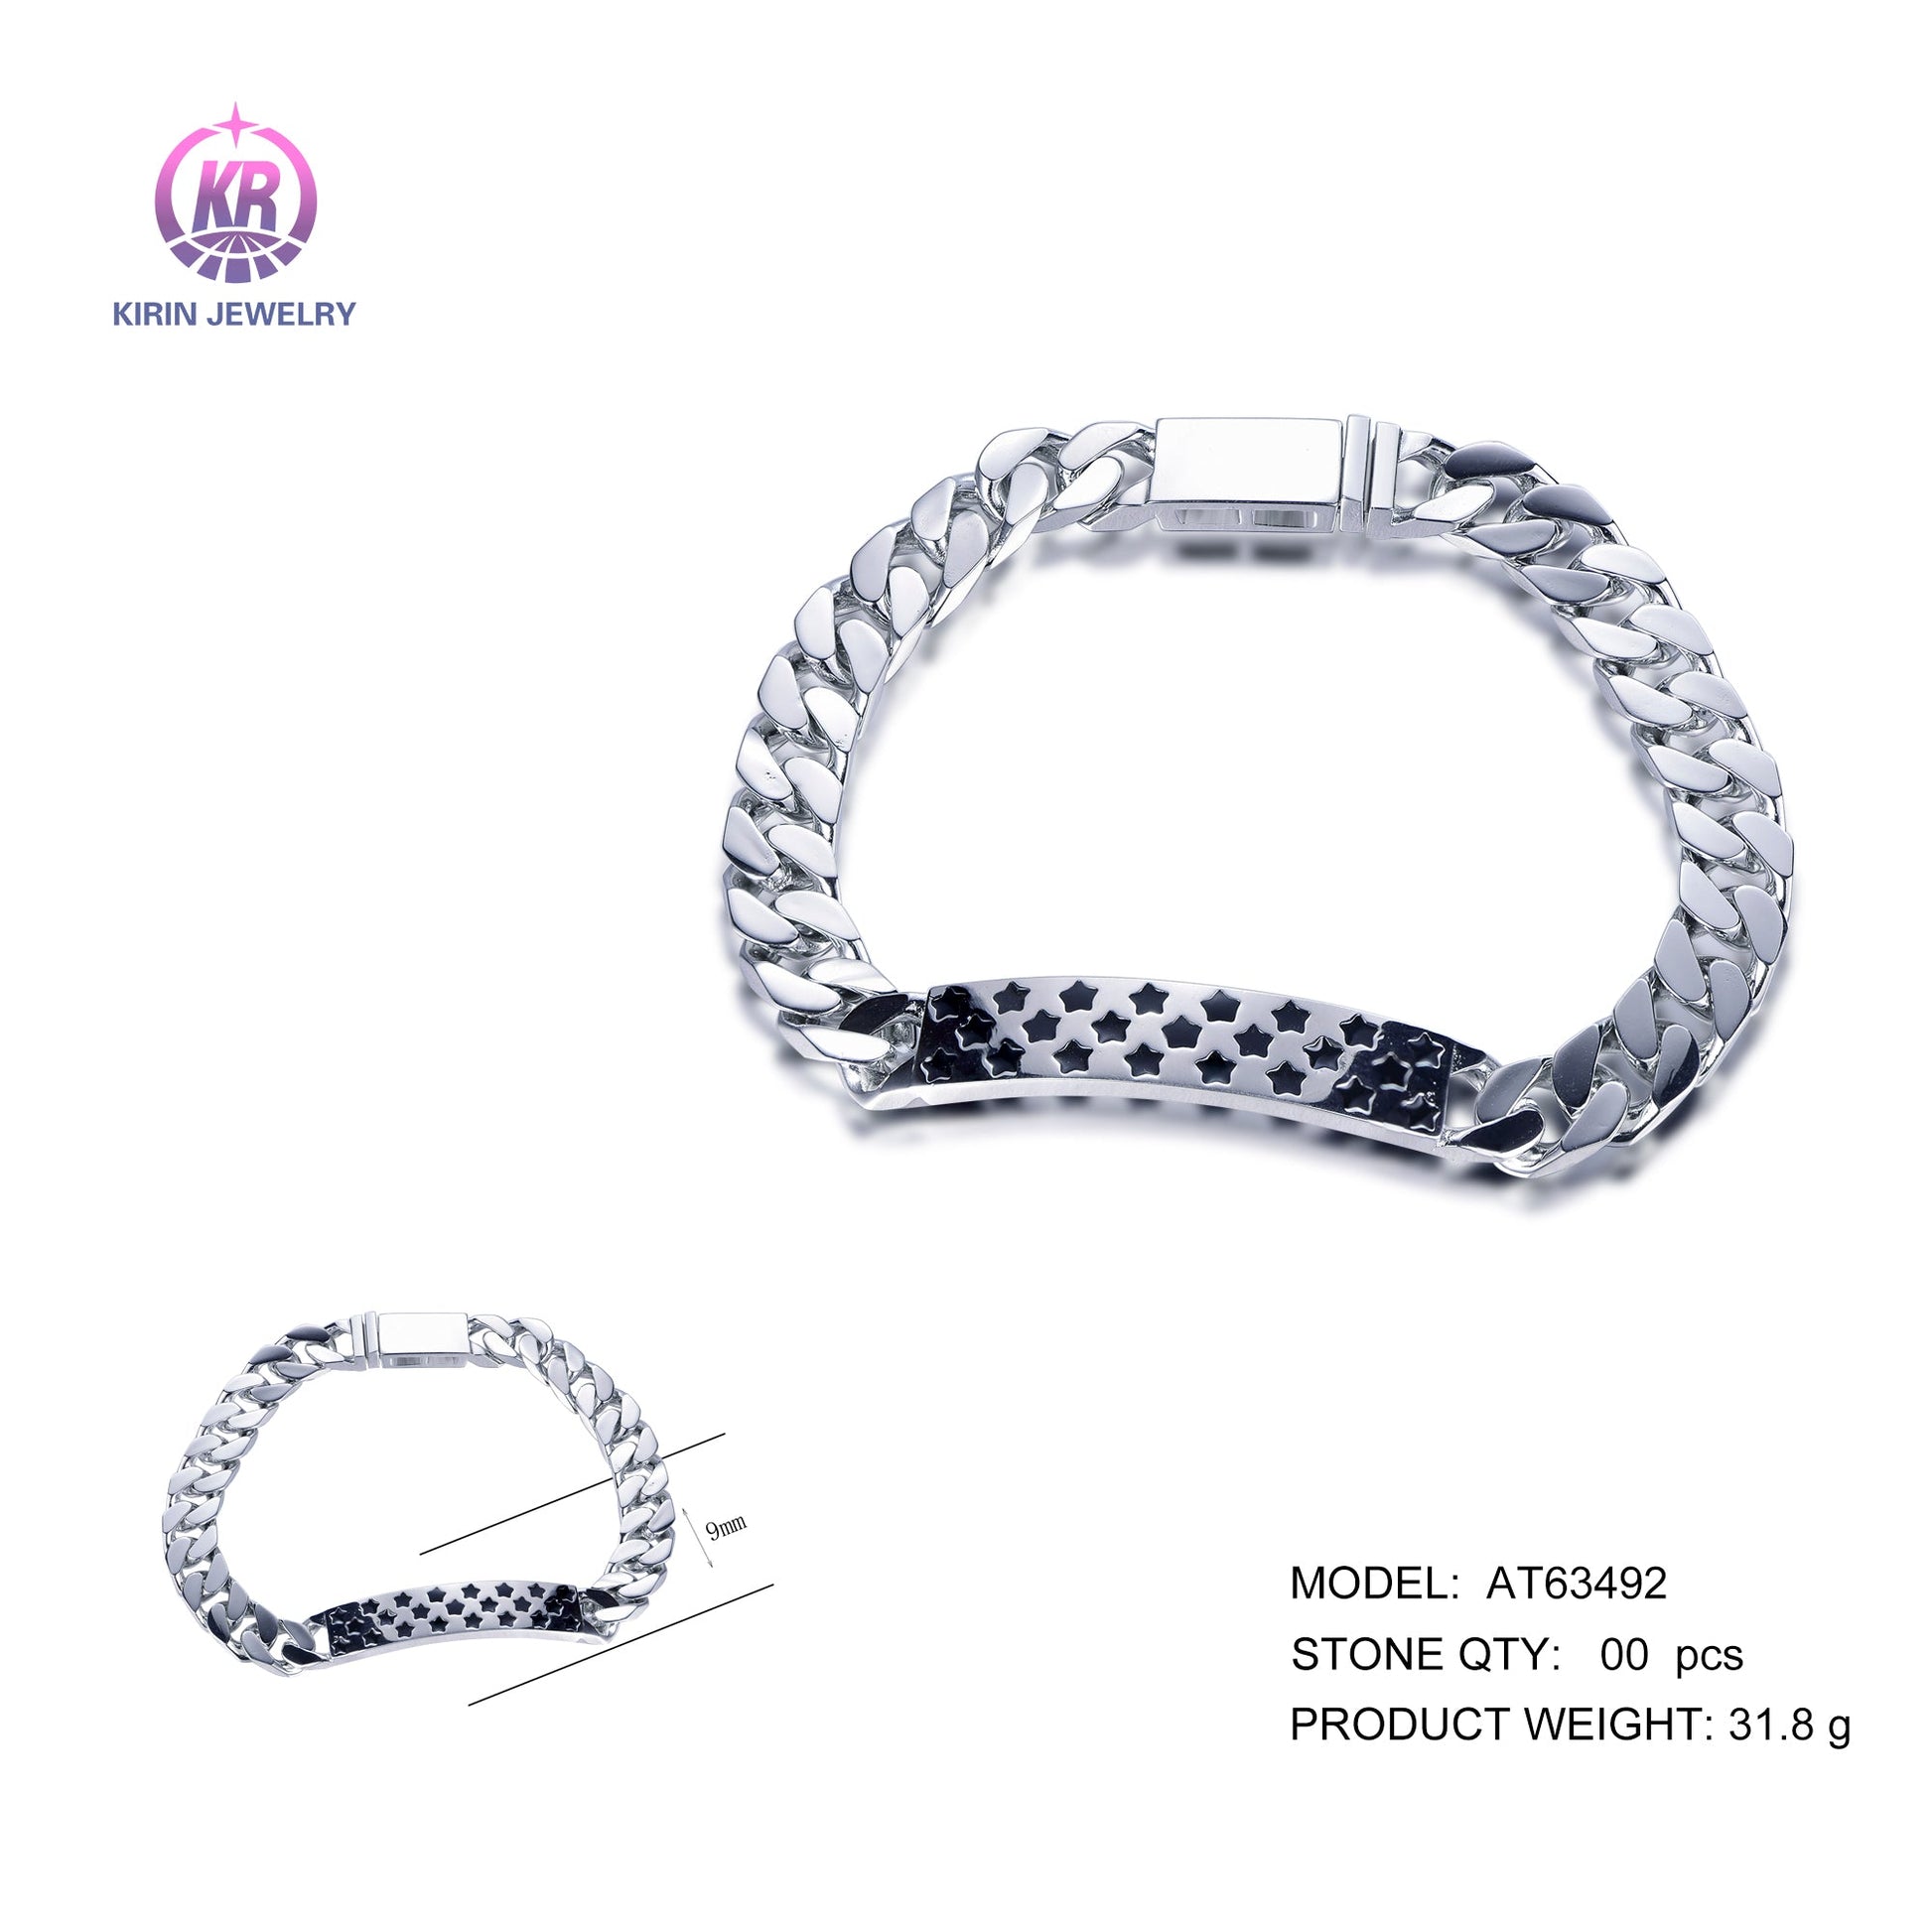 925 silver bracelet with rhodium plating AT63492 Kirin Jewelry